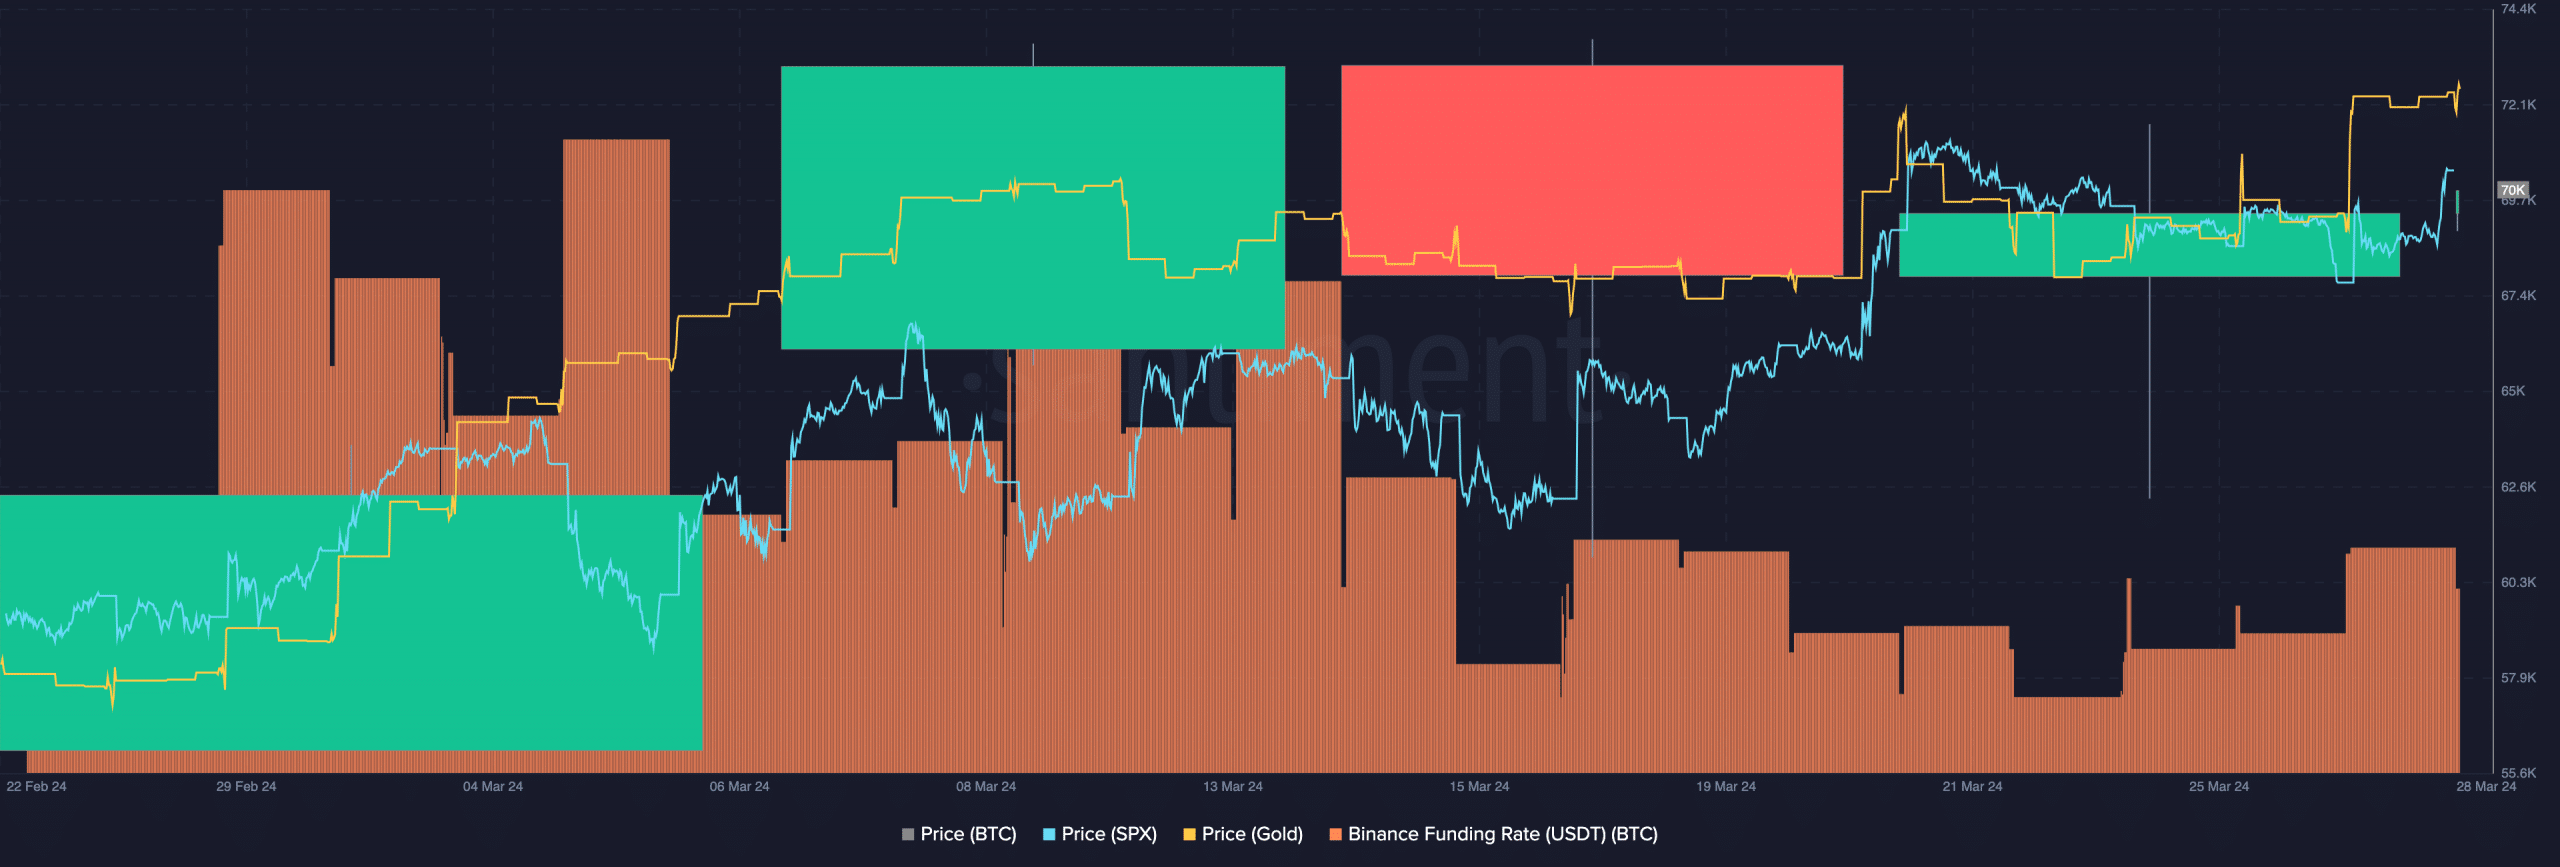 Bitcoin's price showing bullish signals